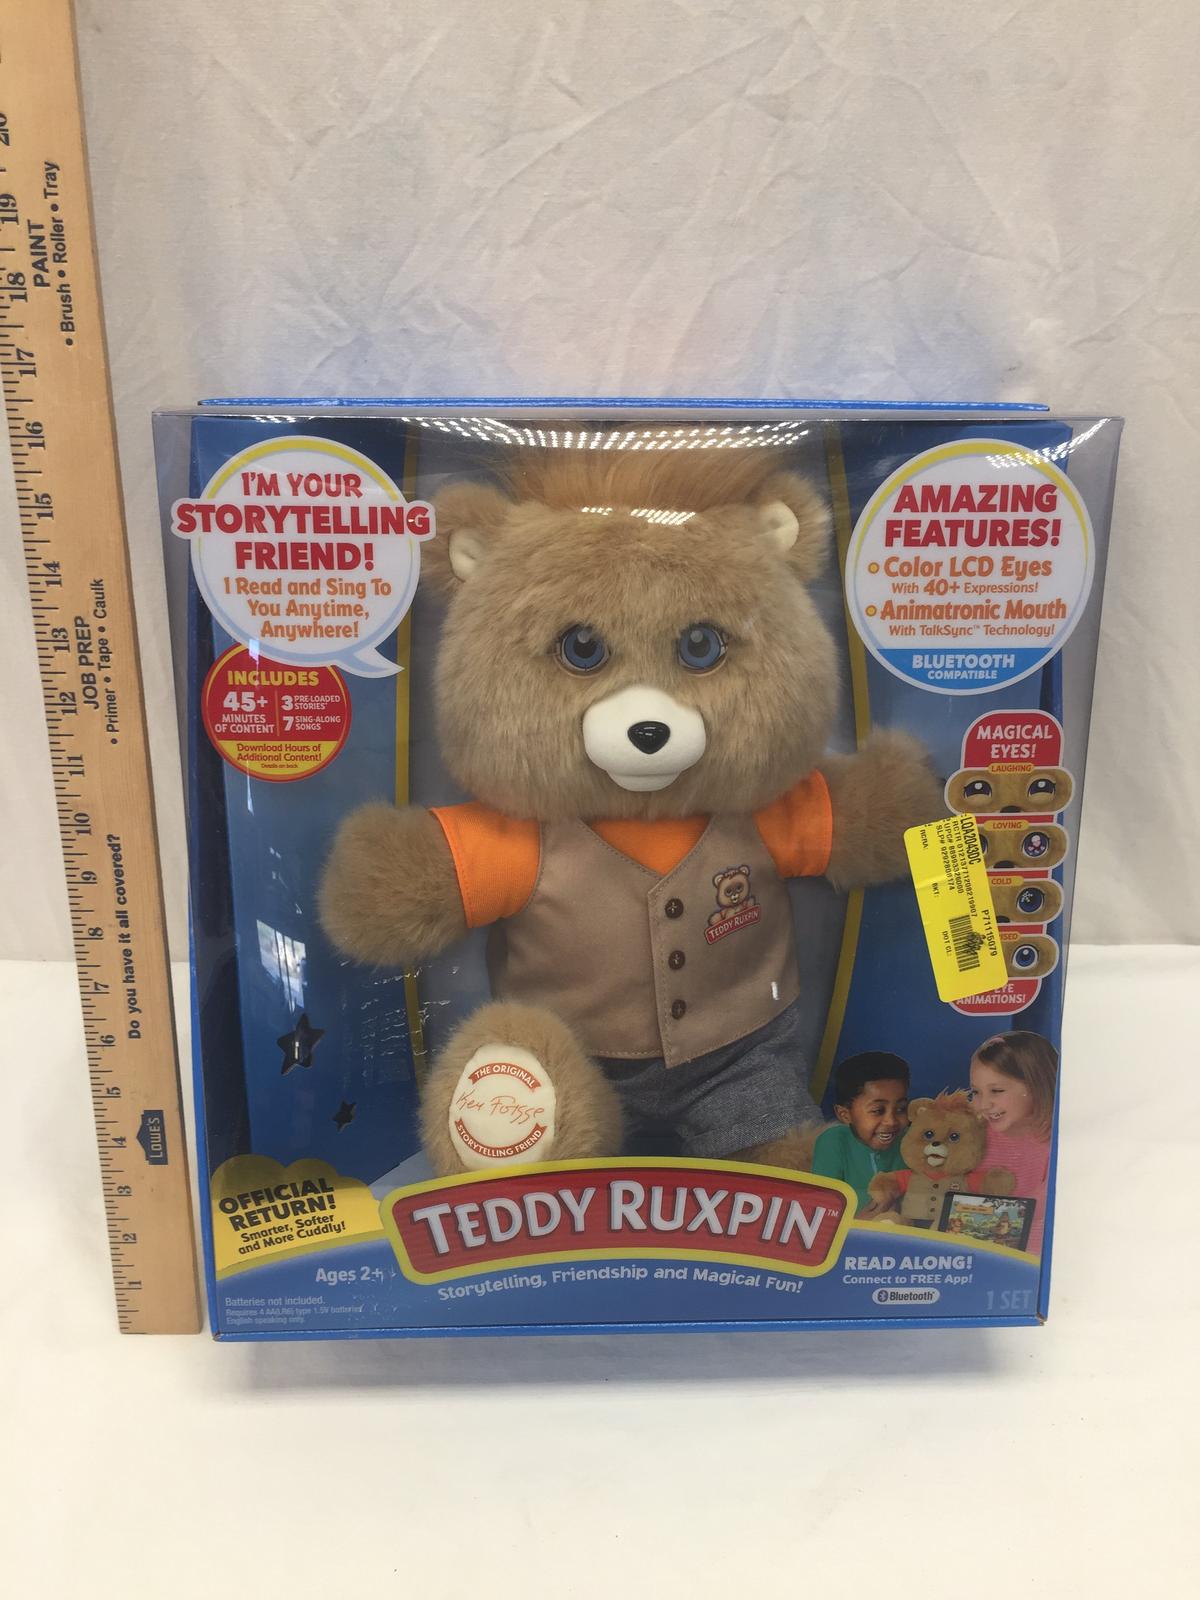 Teddy Ruxpin Original Return Storytelling Friend